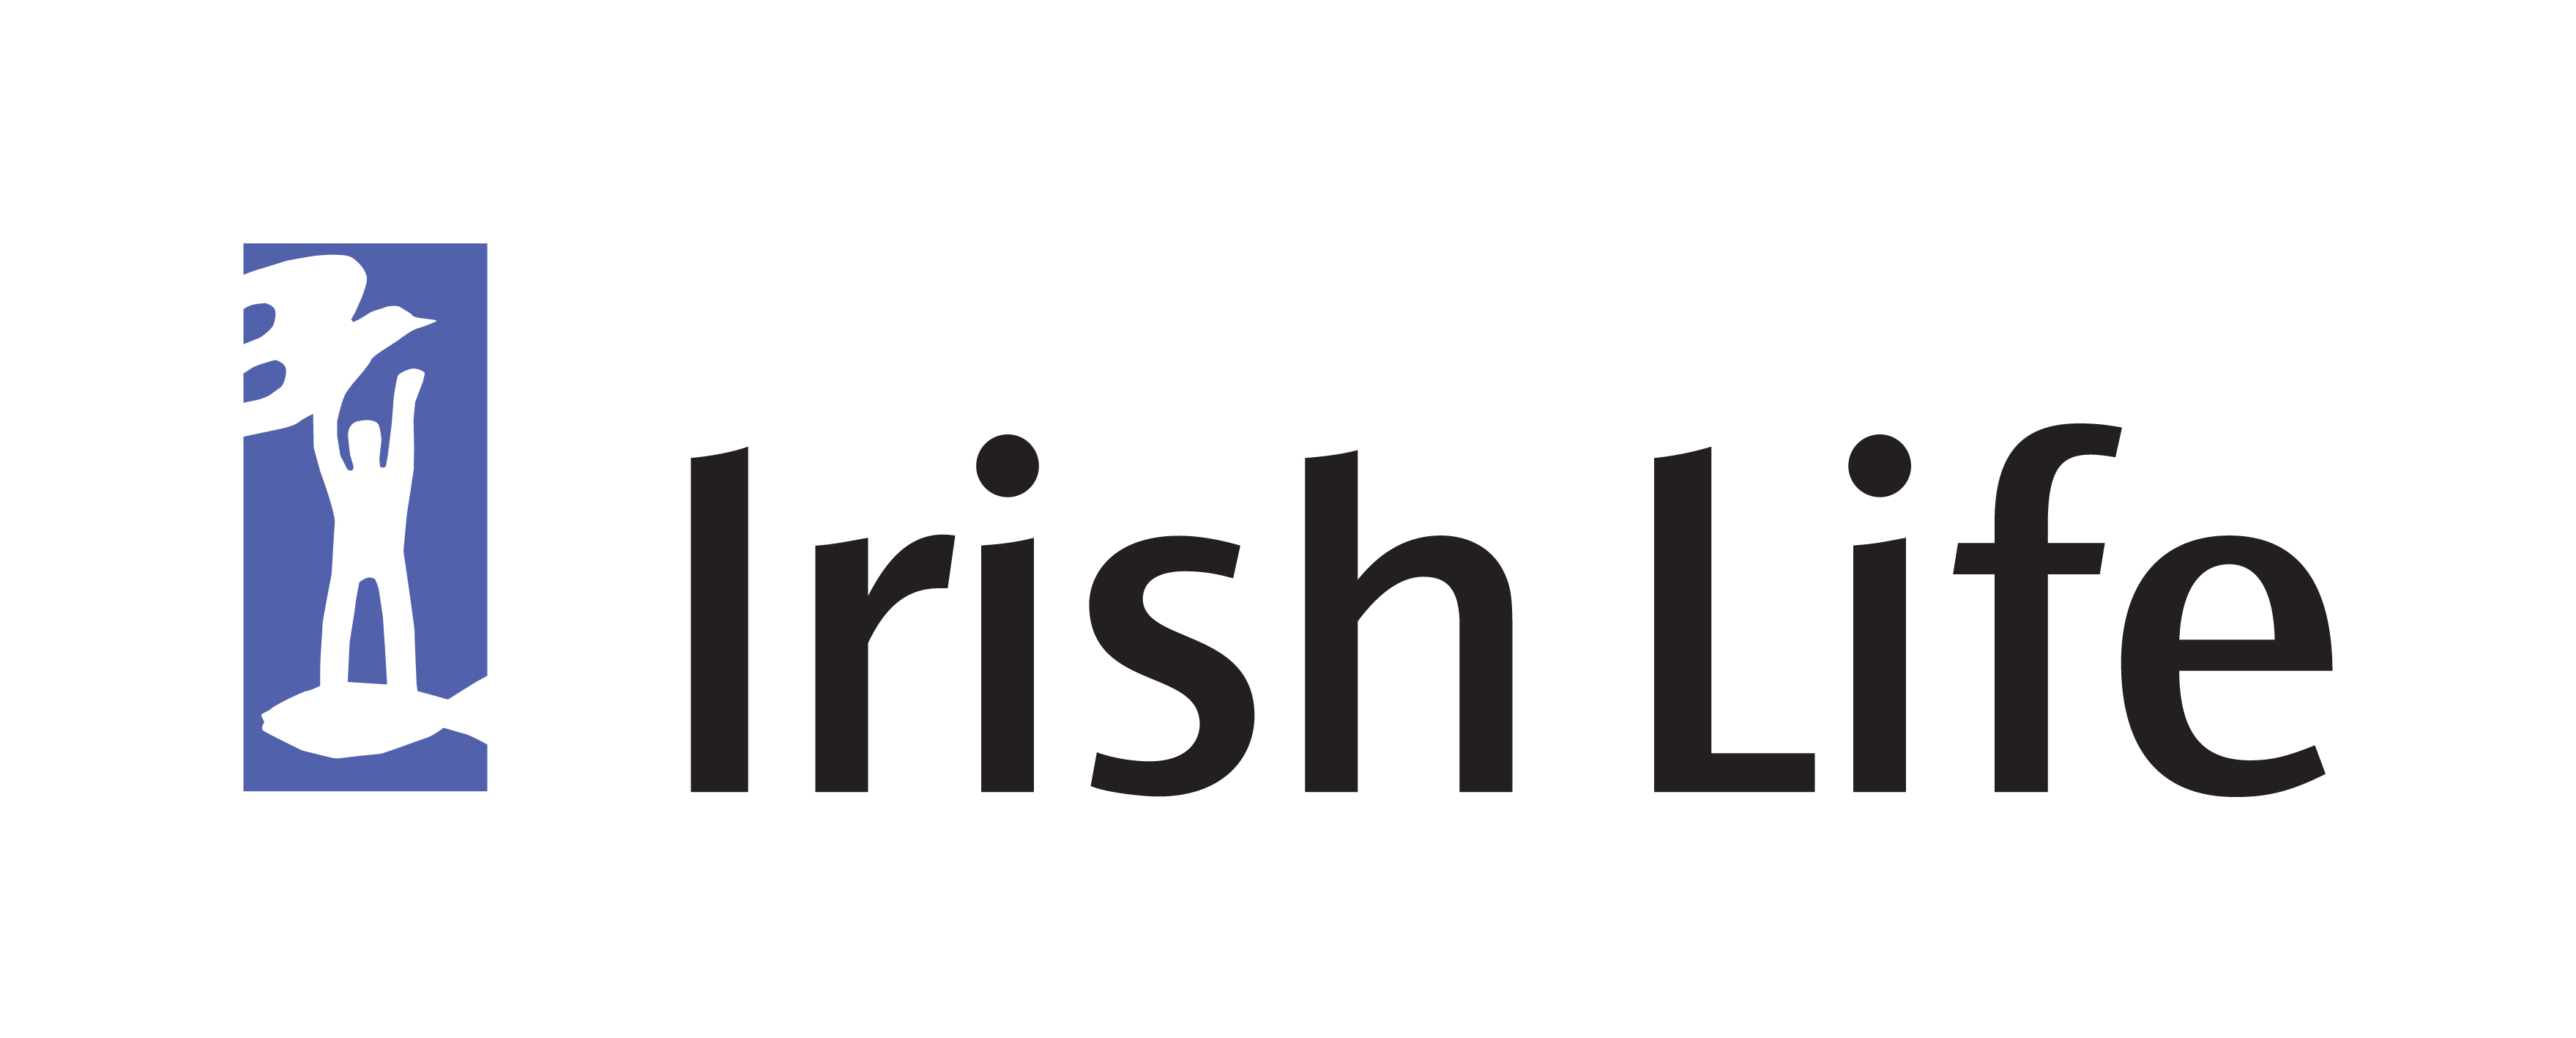 momentum_Irish life insurance.jfif